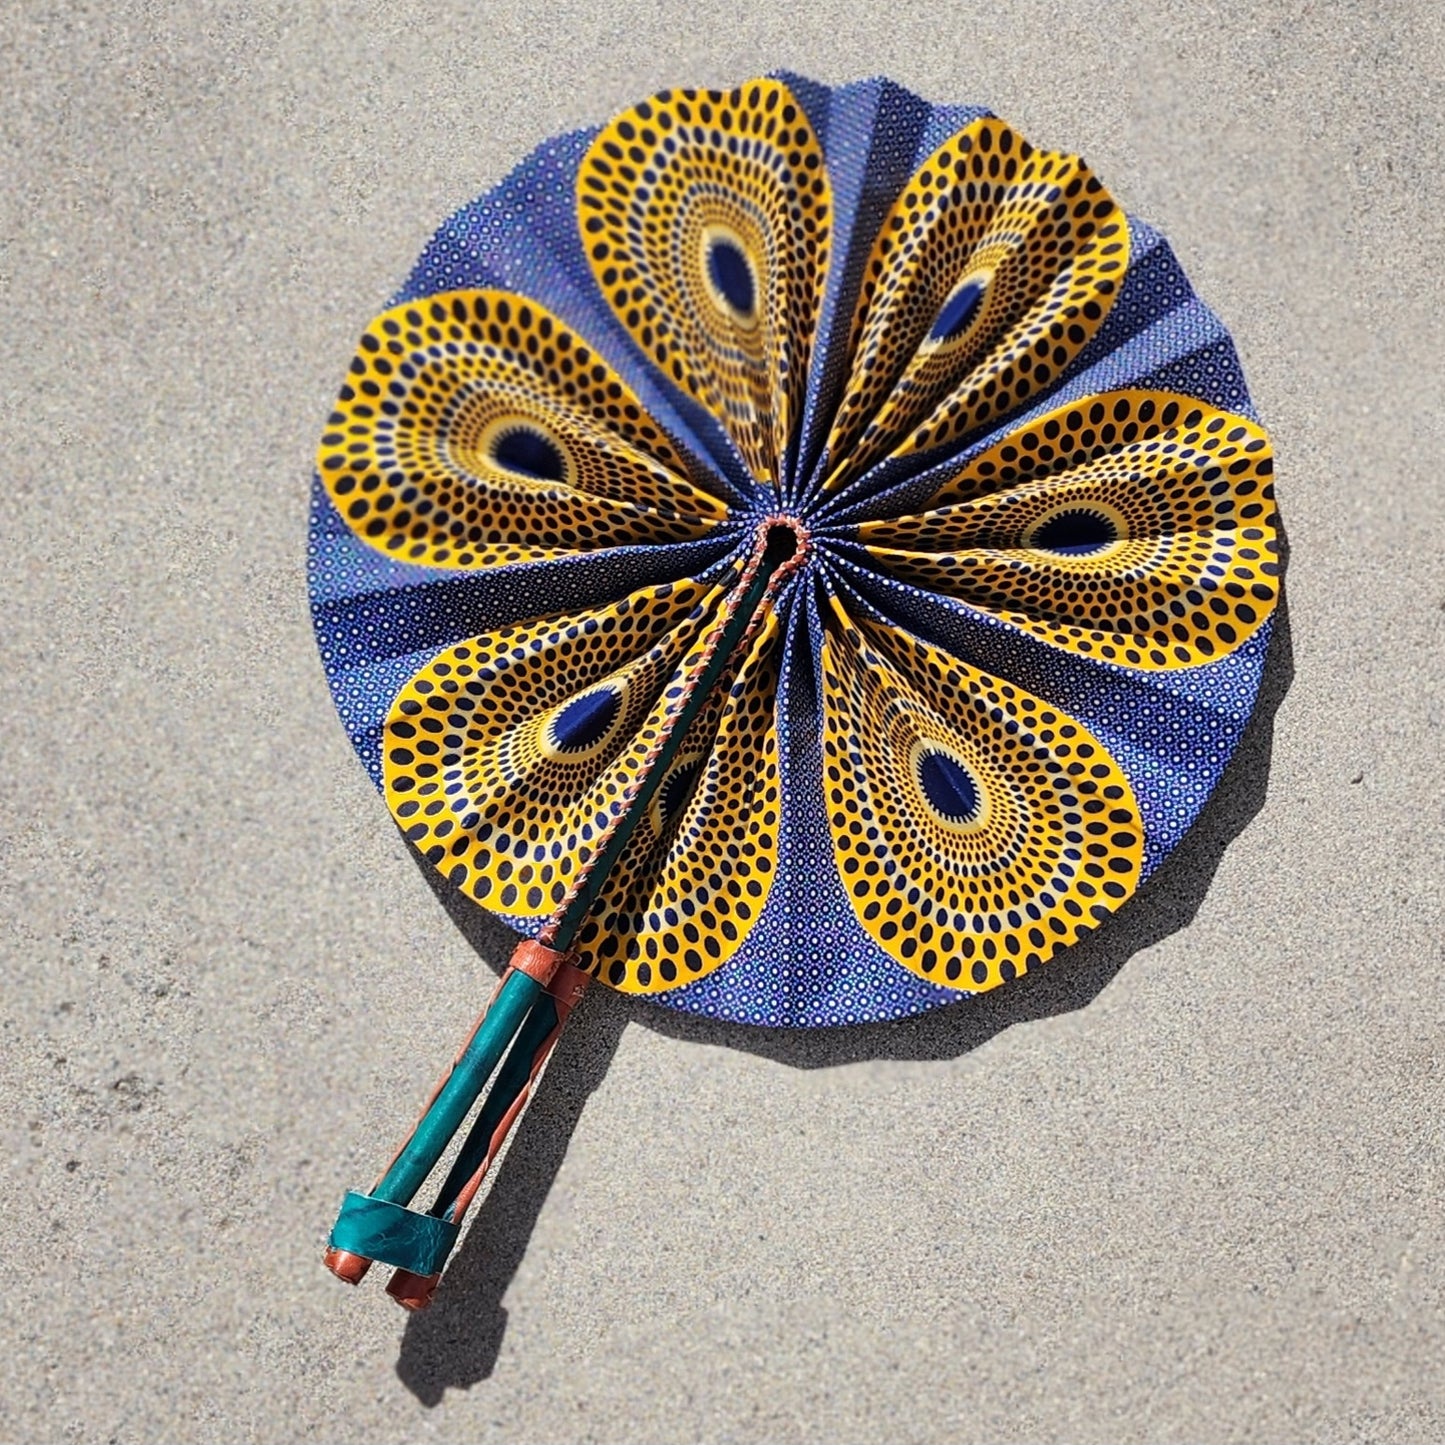 Medium Sized African Hand Fan